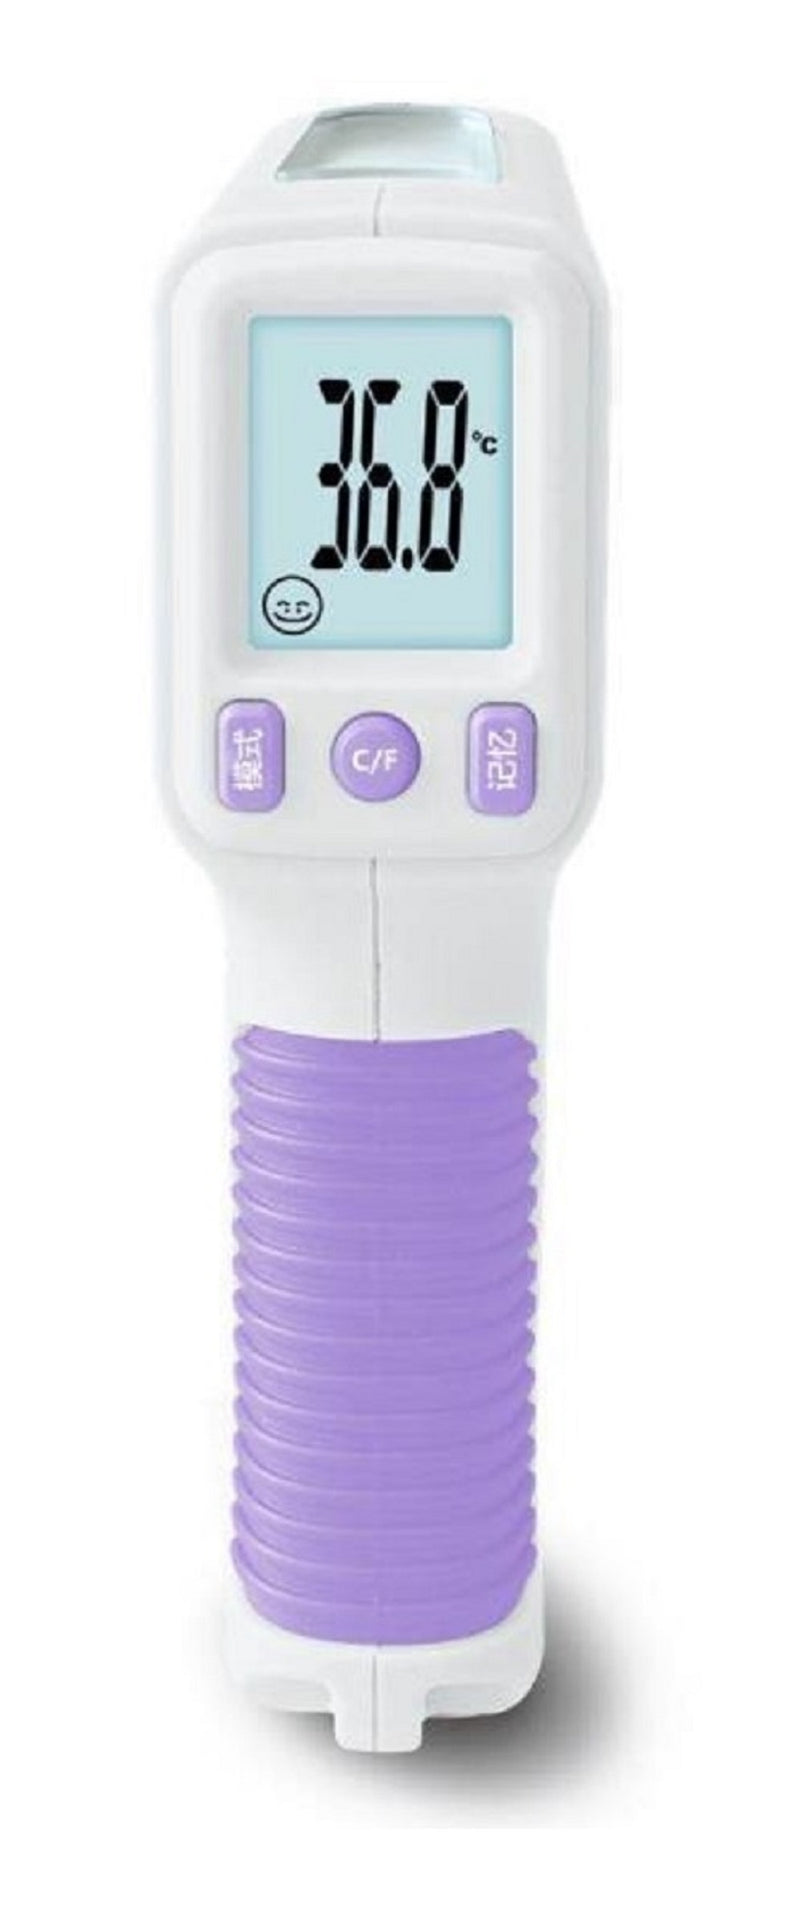 Caretalk TH5001N Electronic Thermometer